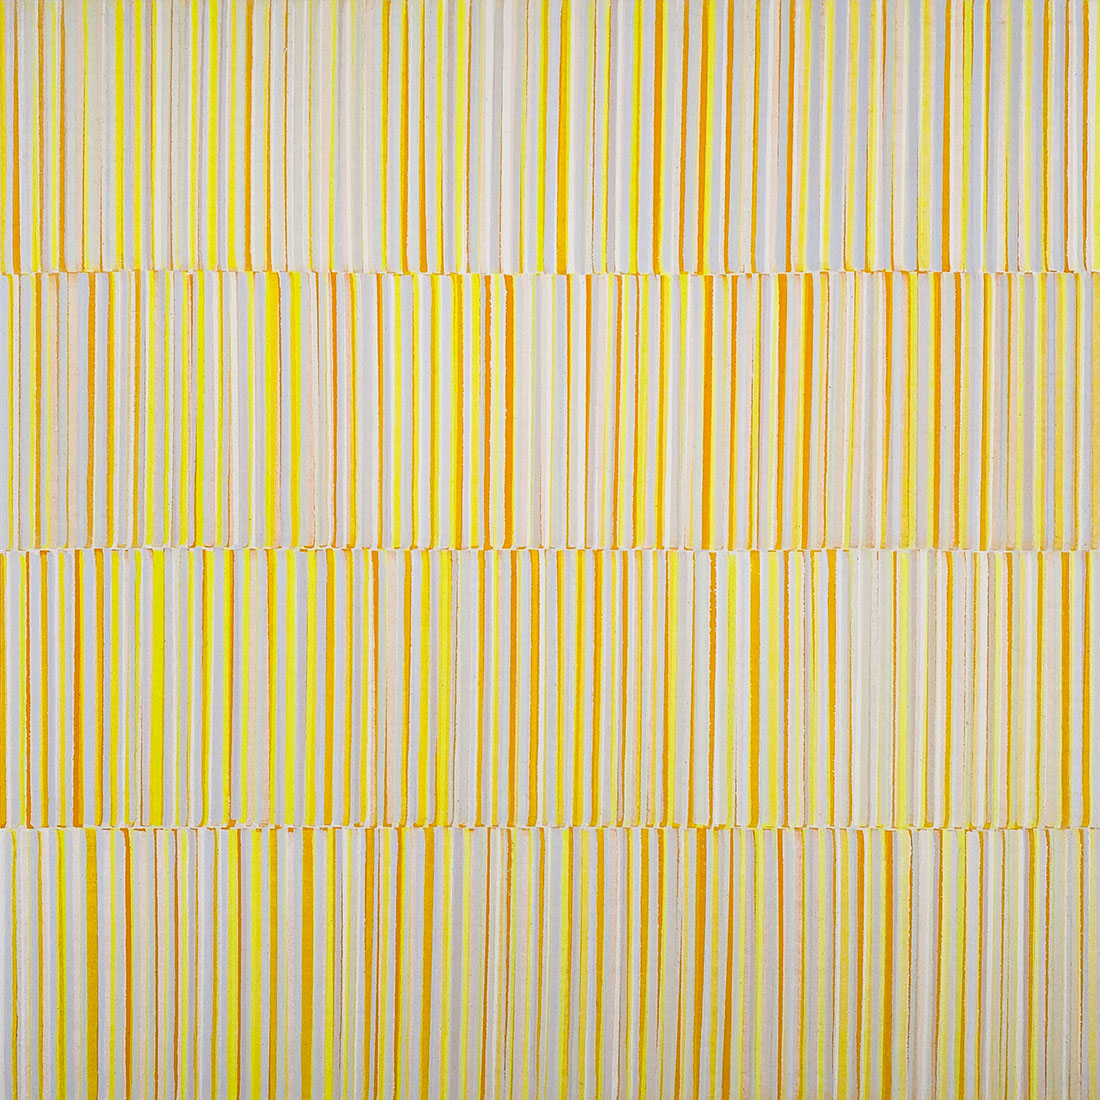 Nikola Dimitrov, FarbKlang Gelb B, 2021, Pigmente, Bindemittel auf Leinwand, 80 × 80 cm